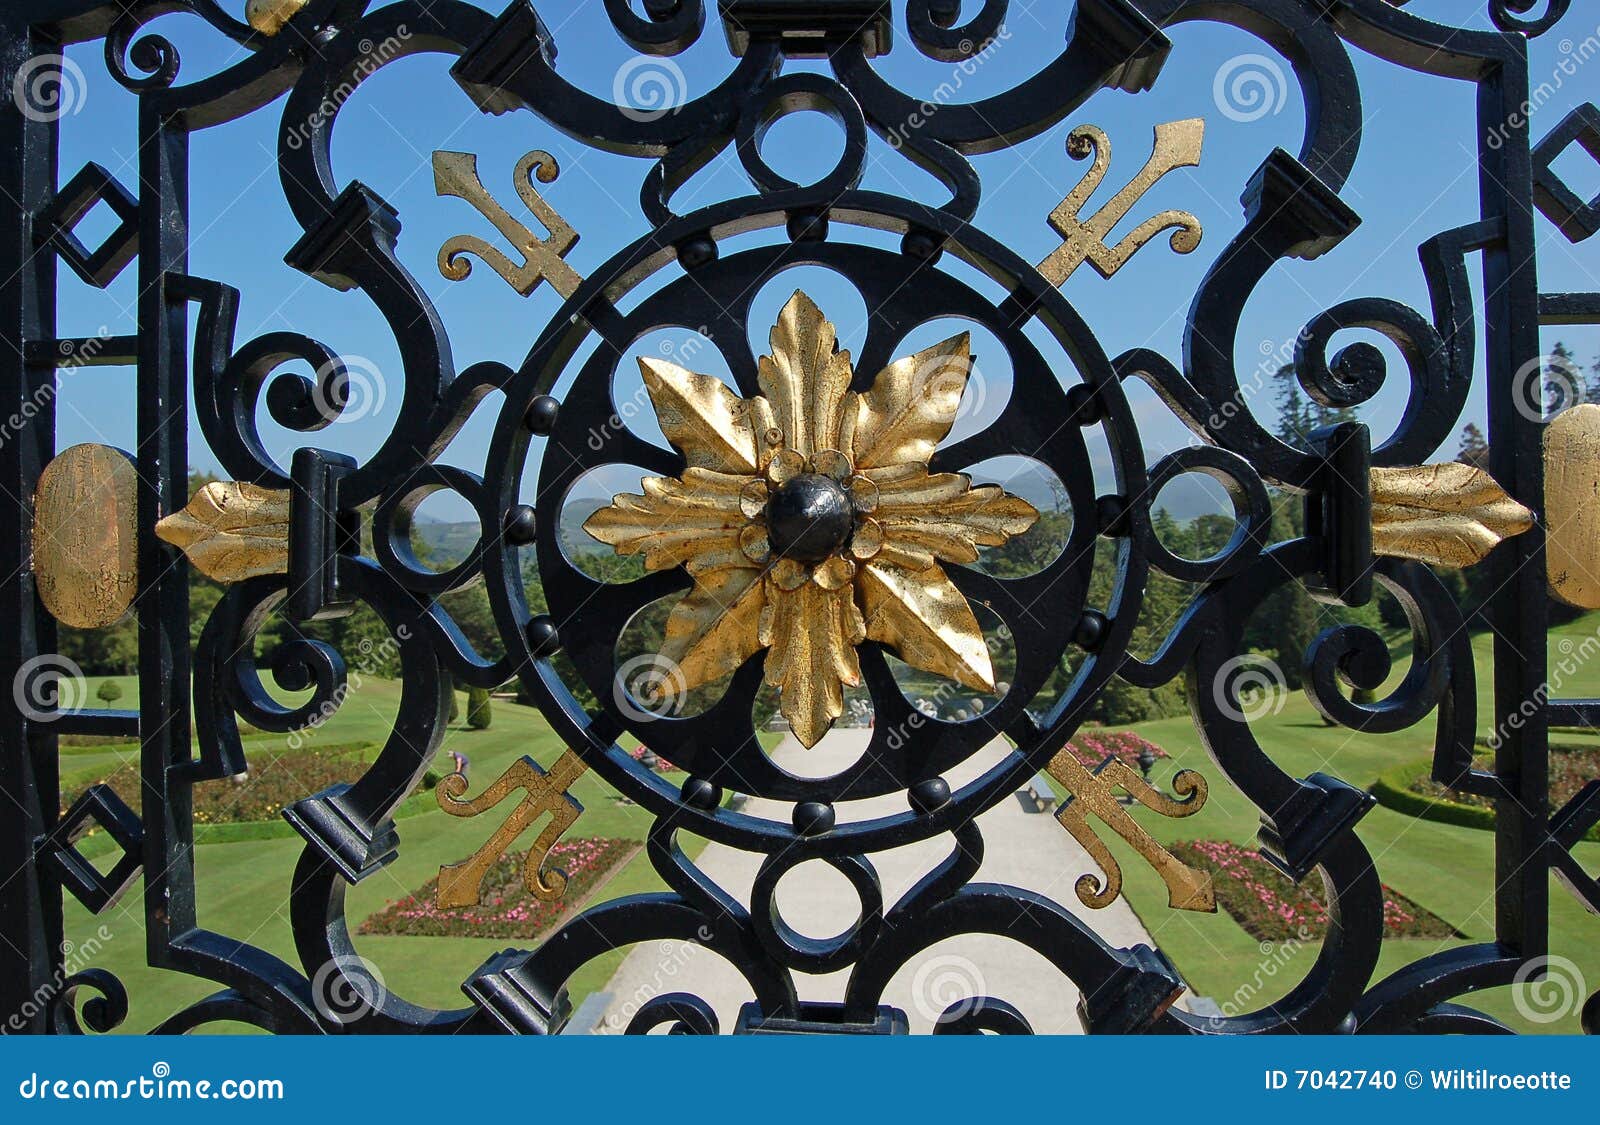 example of craftsmanship wrought iron fence